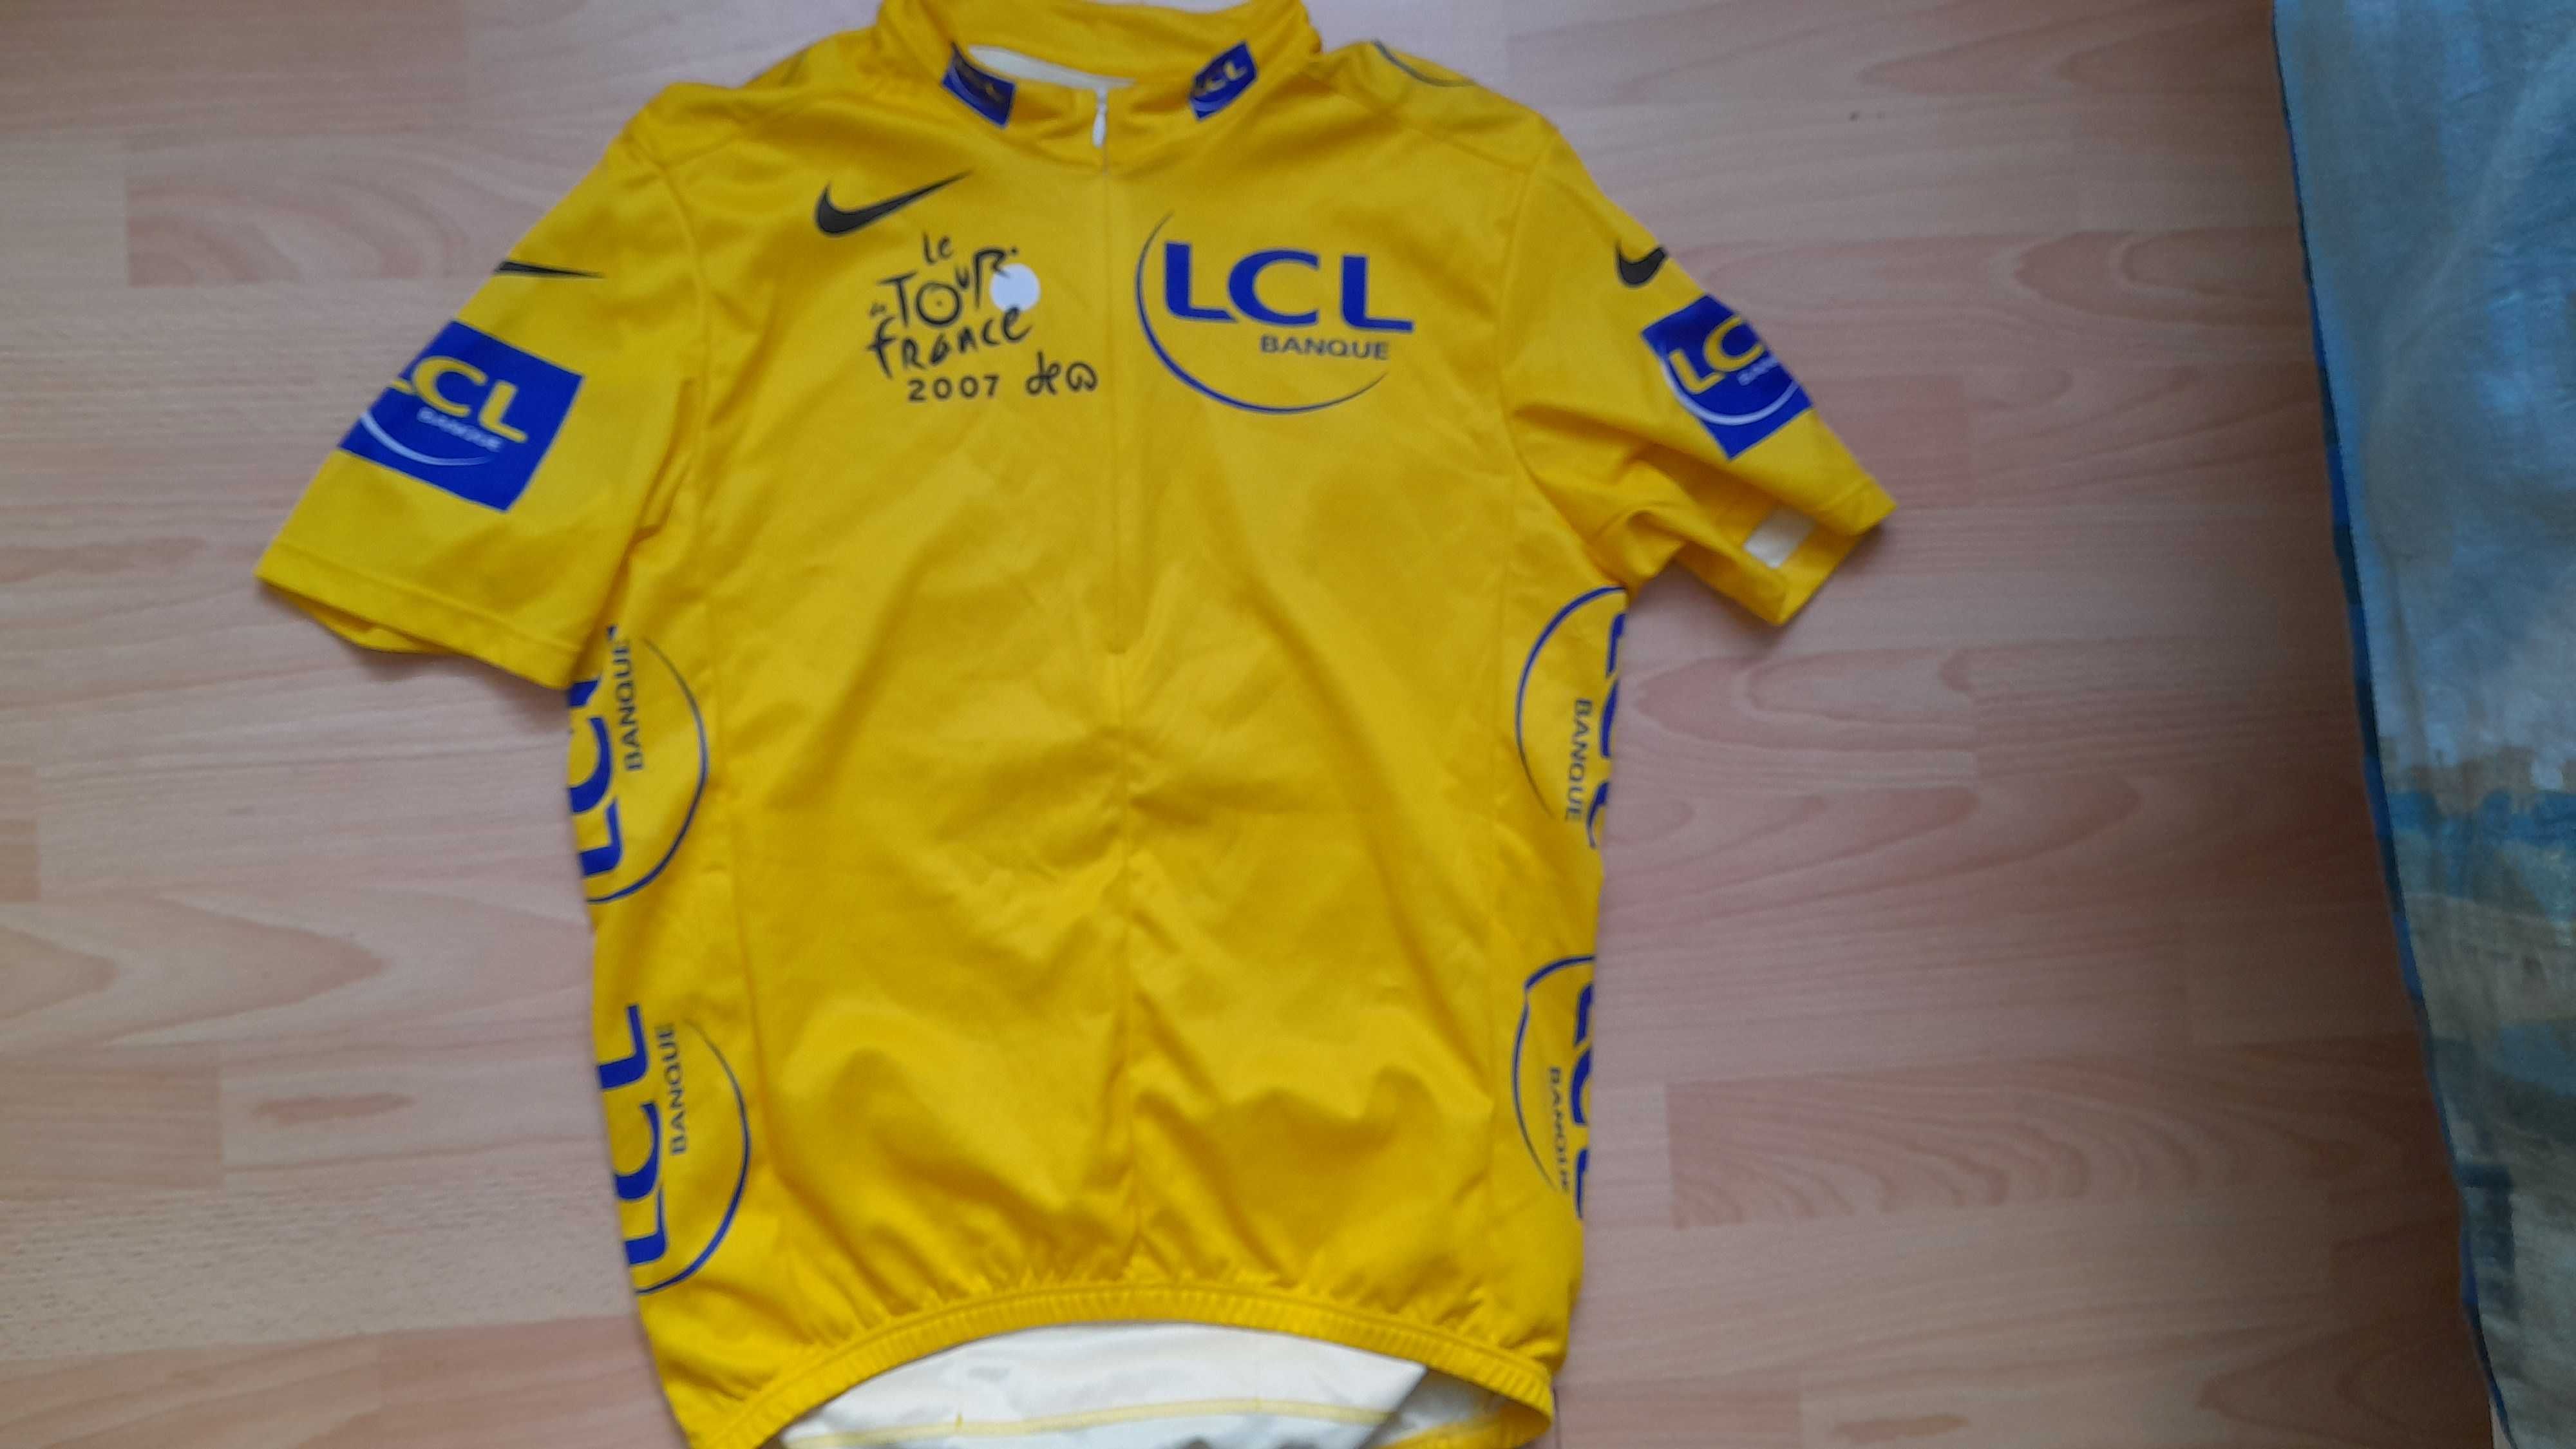 Nike Le Tour De France 2007 t-shirt koszulka rowerowa r. M